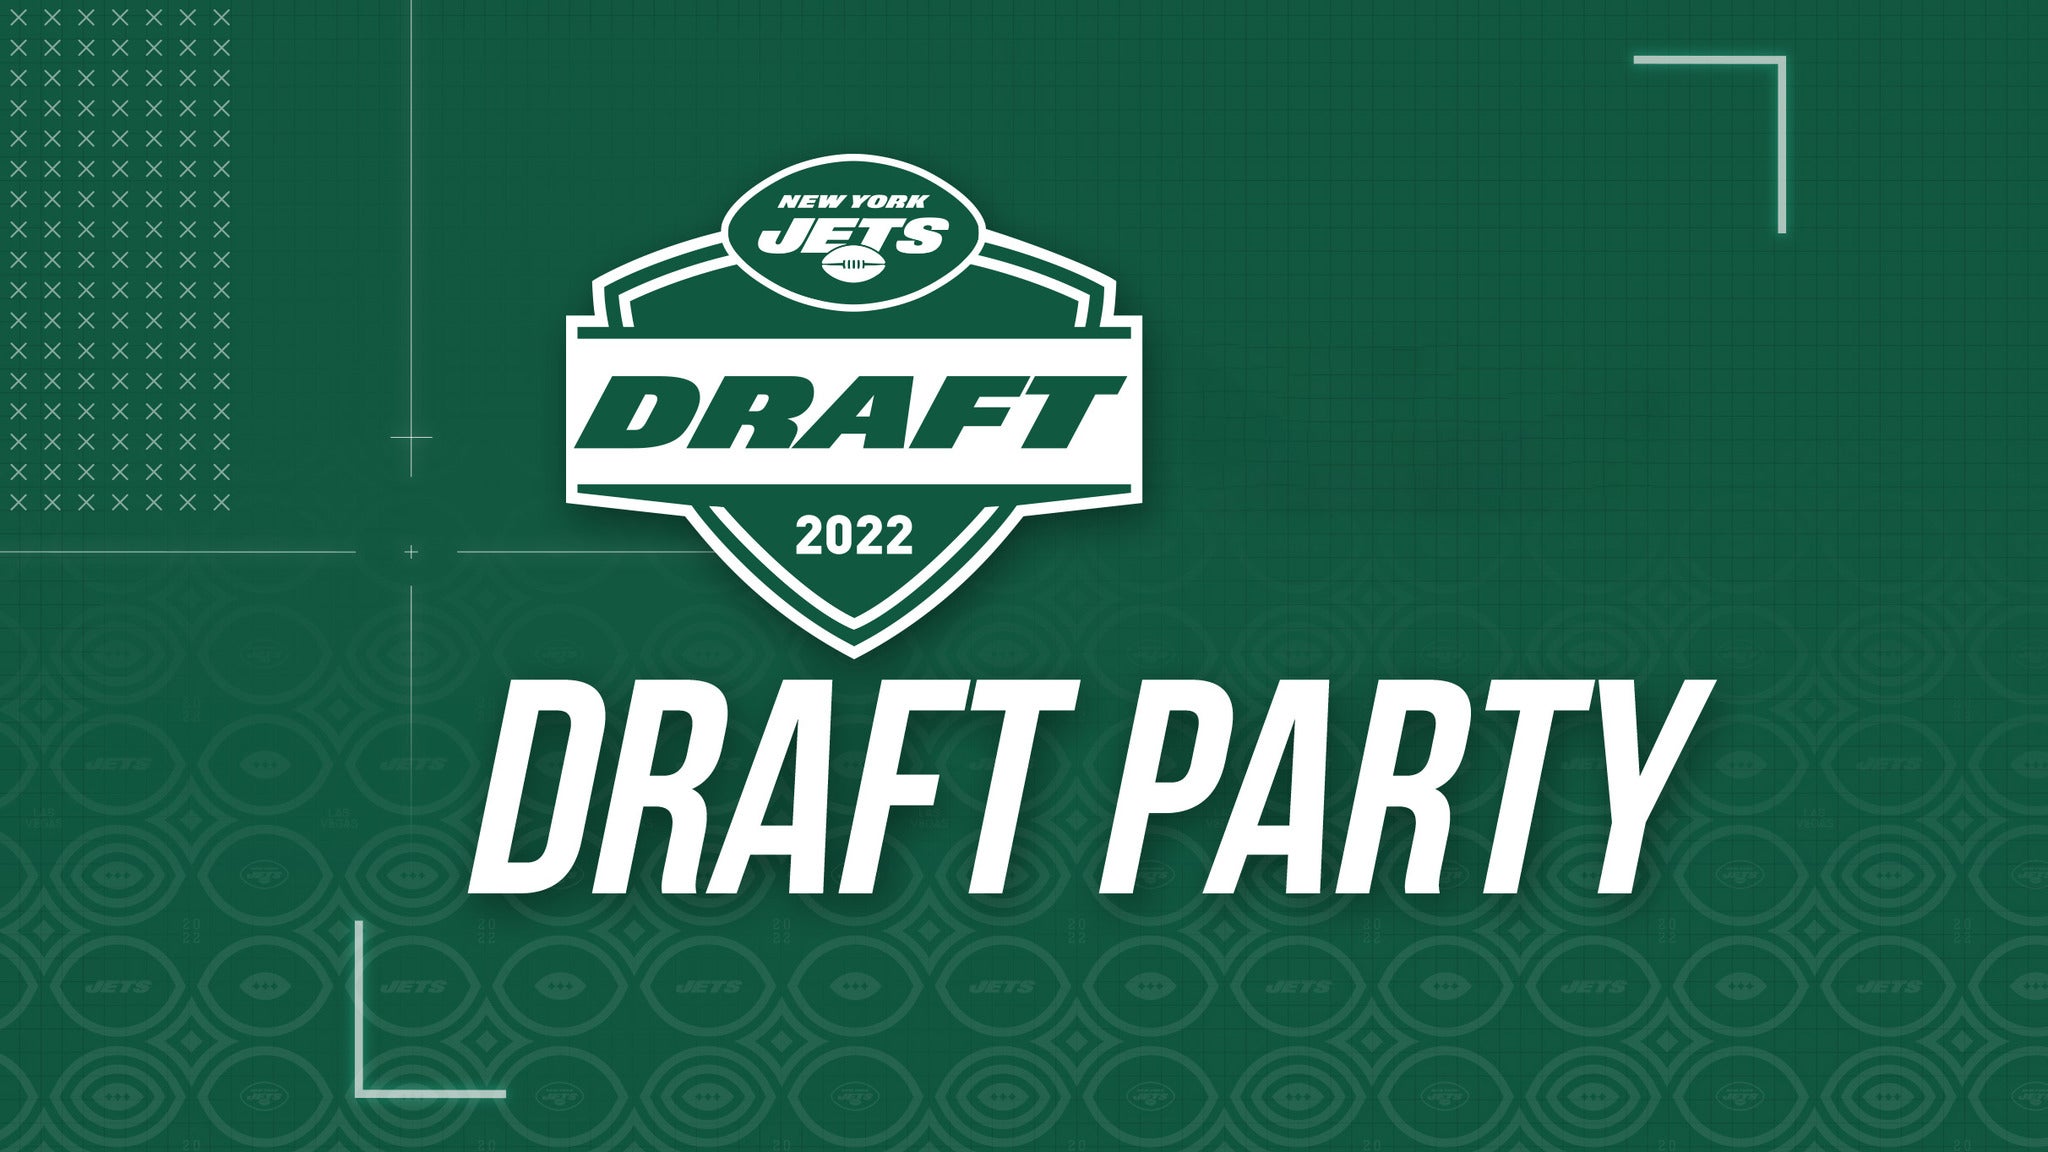 New York Jets Draft Party presale information on freepresalepasswords.com